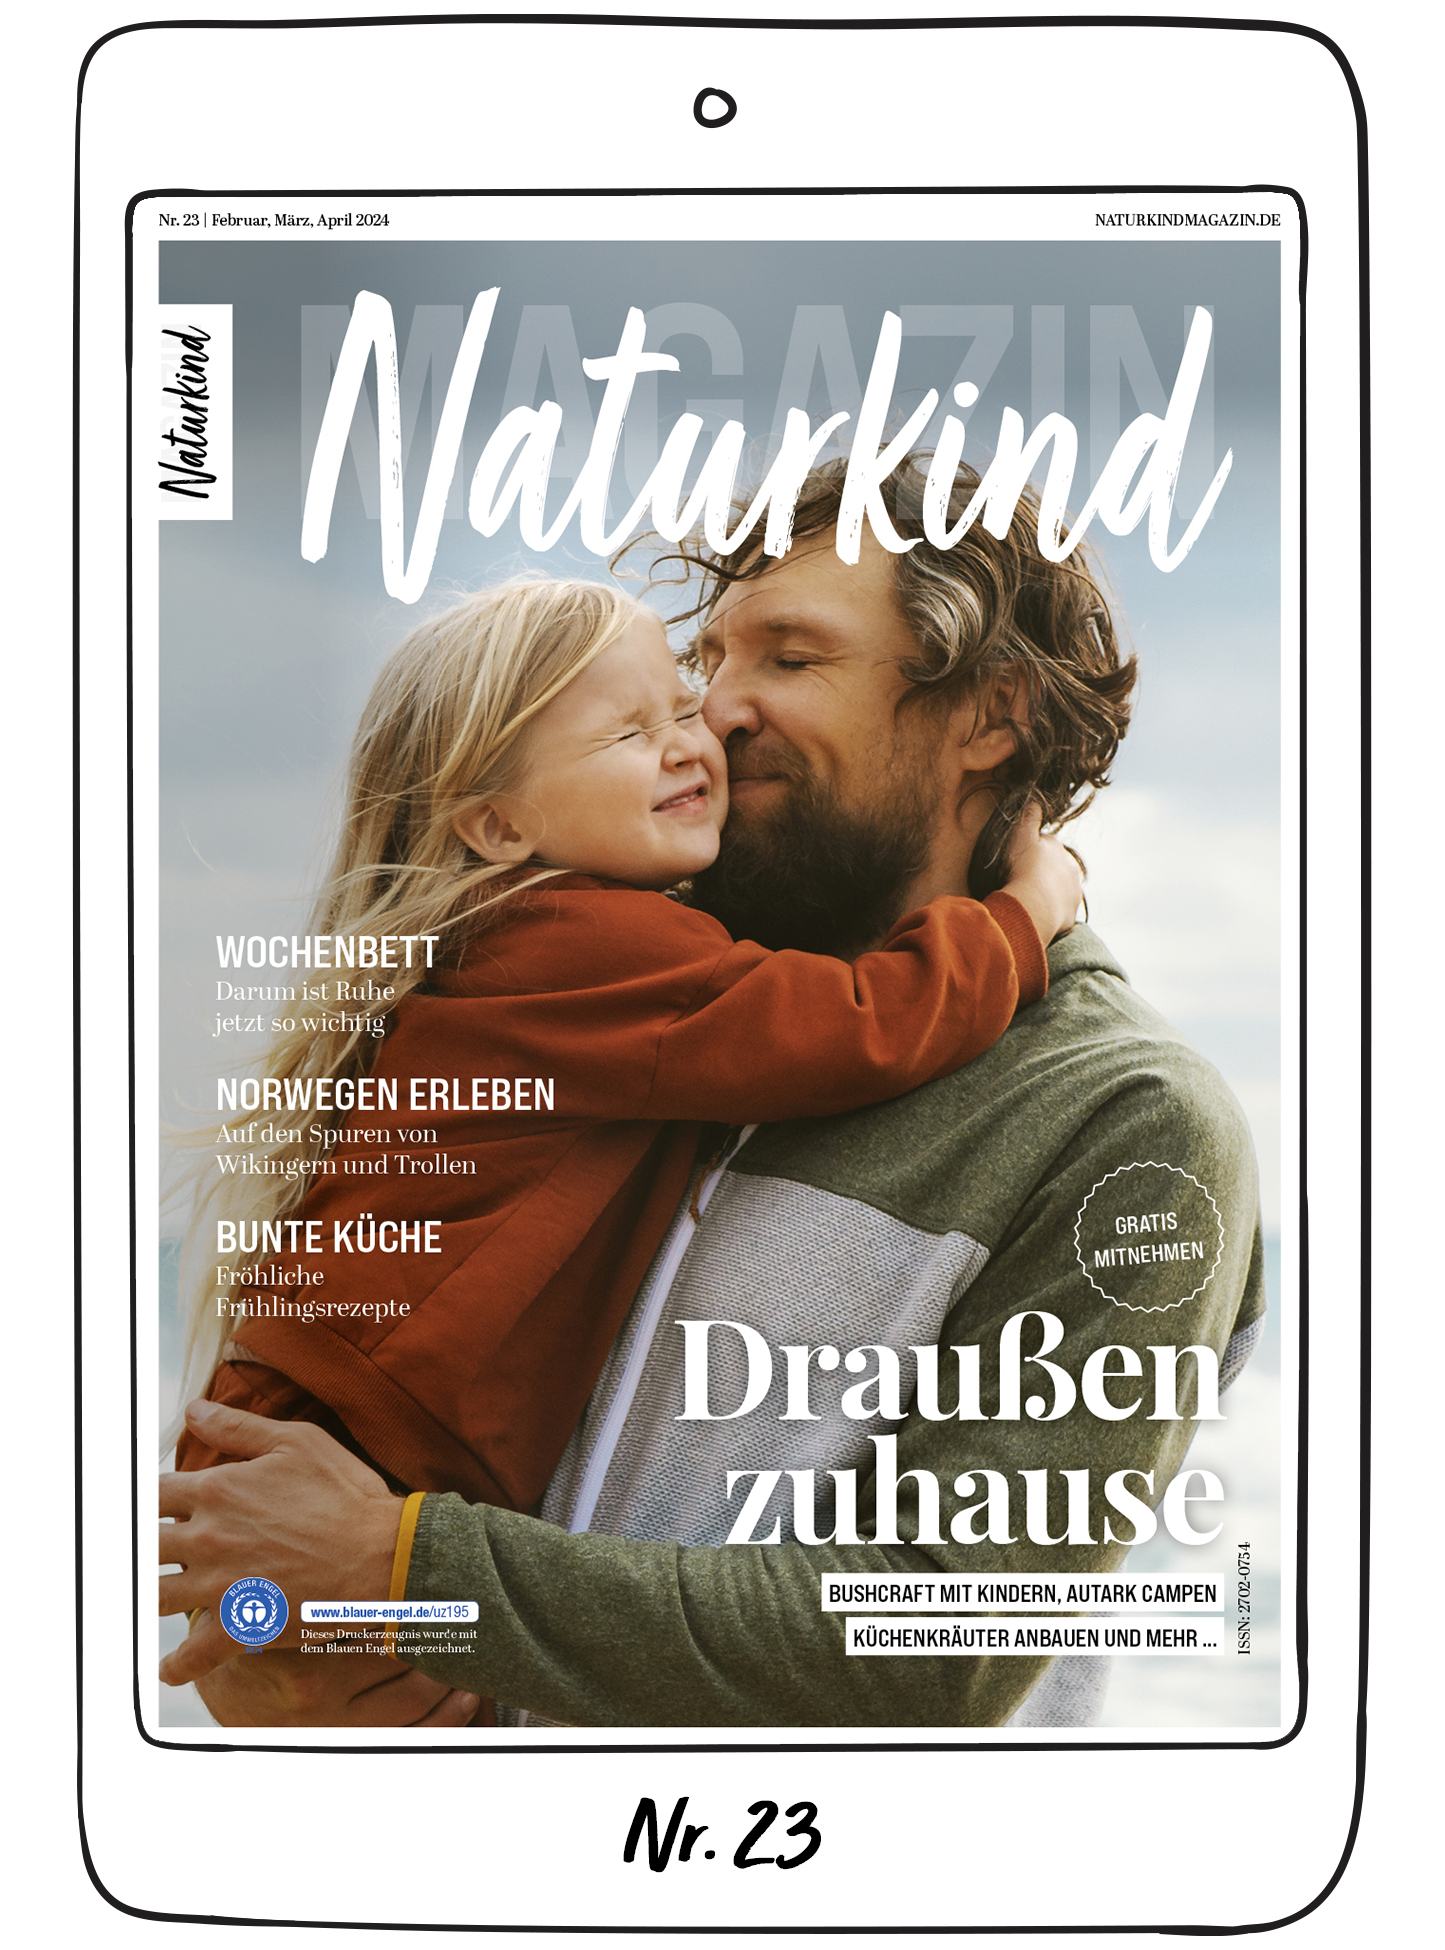 Naturkind Magazin, alternative Elternzeitschrift, Eltern Magazin, Landkind, Naturkind, Dorfkind, Eltern